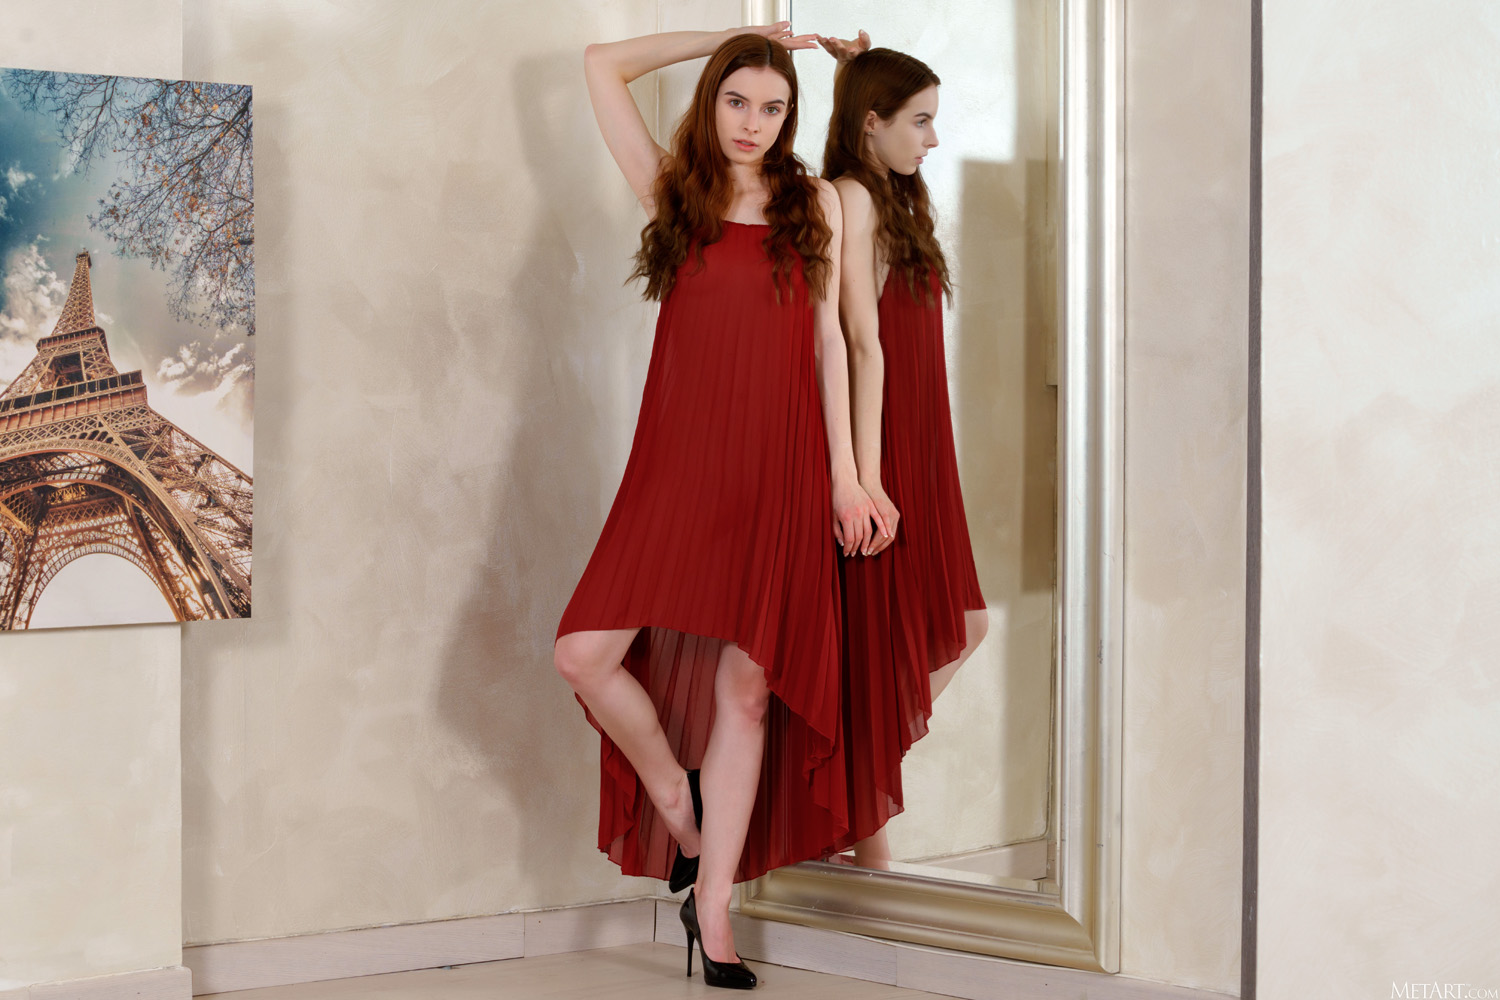 Loren Sun peels off her elegant red dress in front of the full length mirror